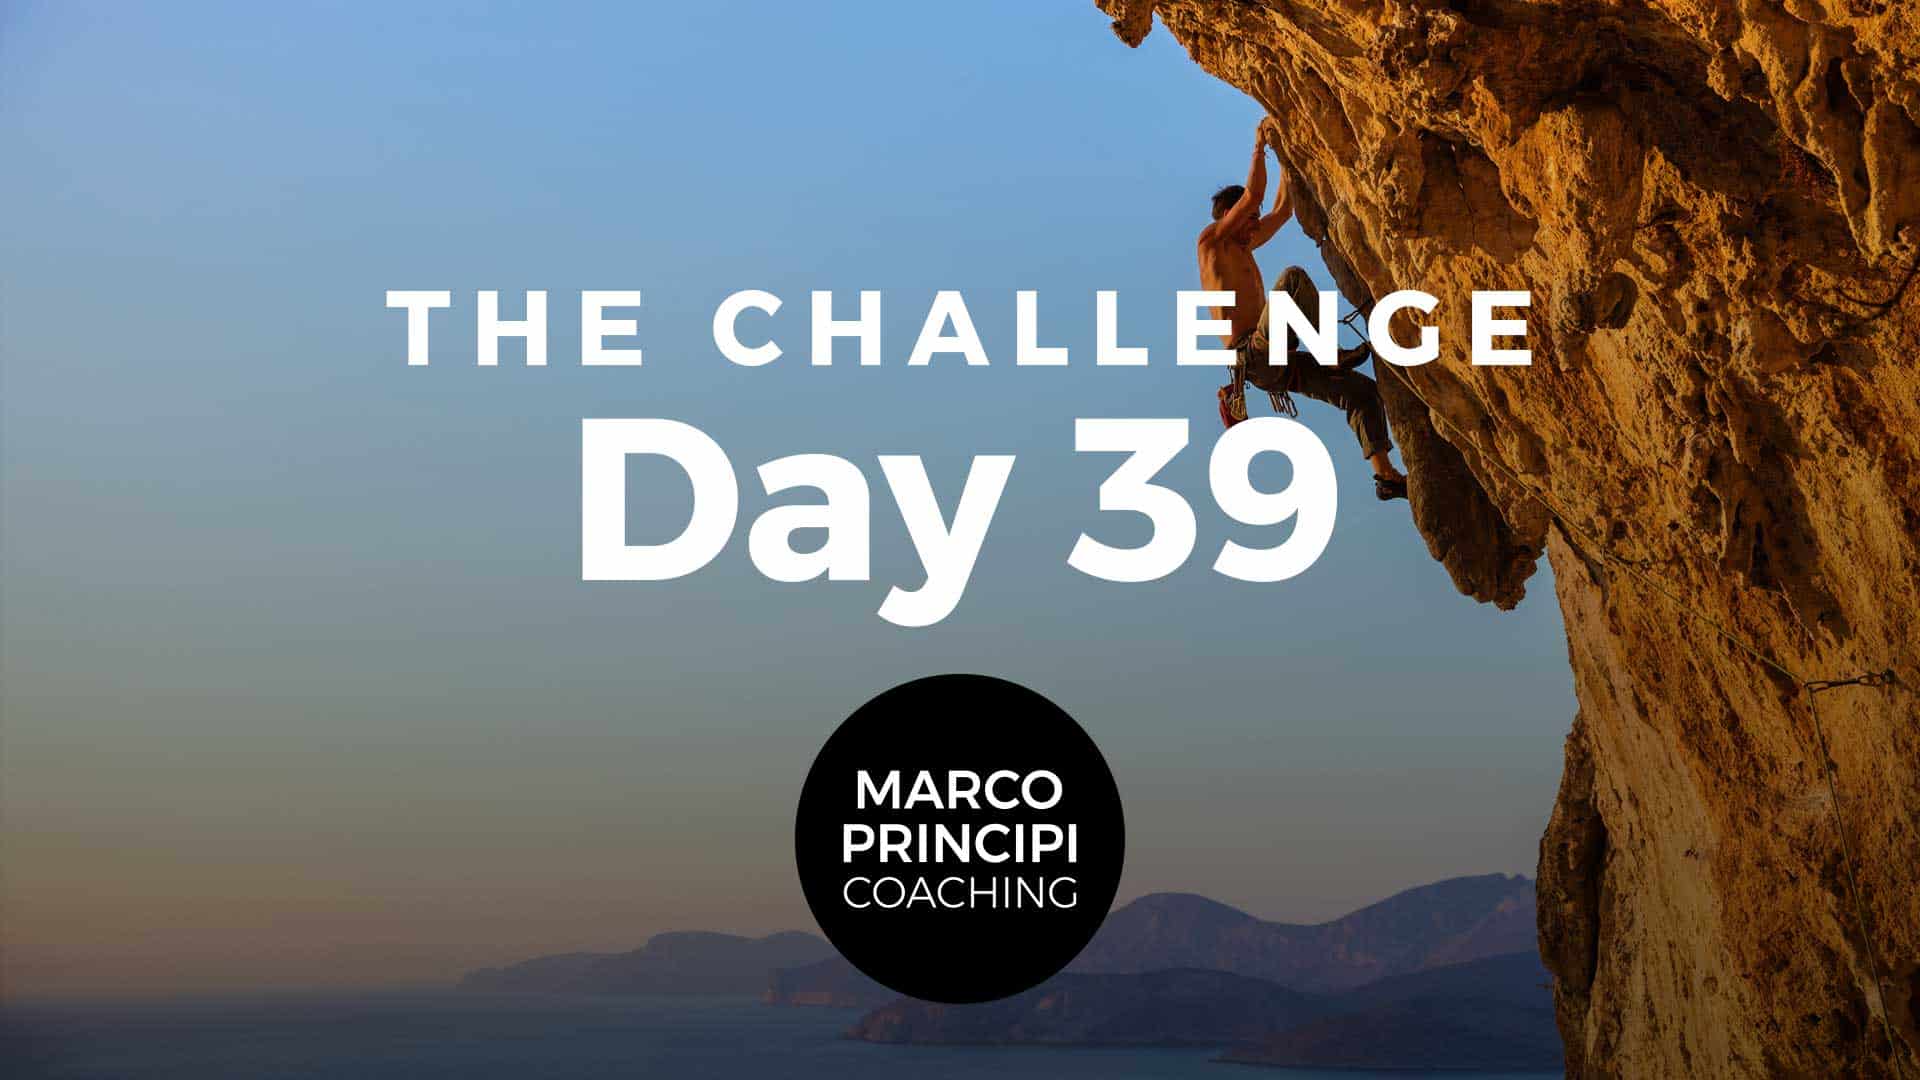 Marco Principi The Challenge Day 39